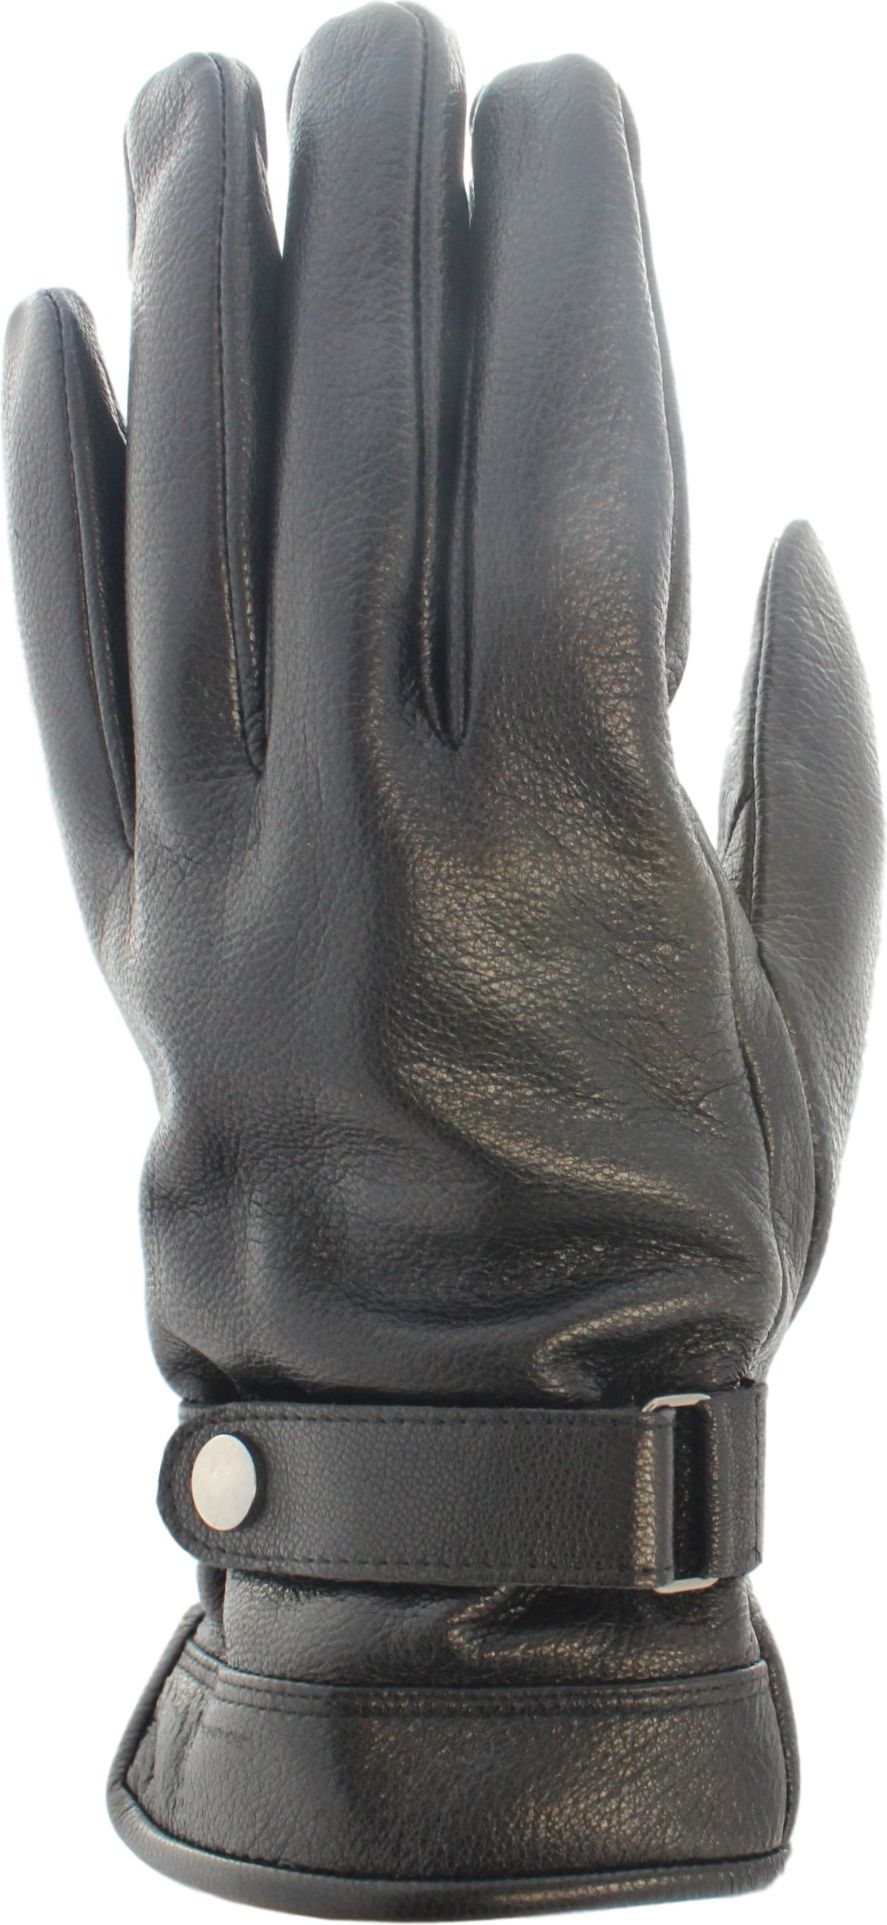 Goatskin Glove Strap Gun Metal Snap Terry Lined Black